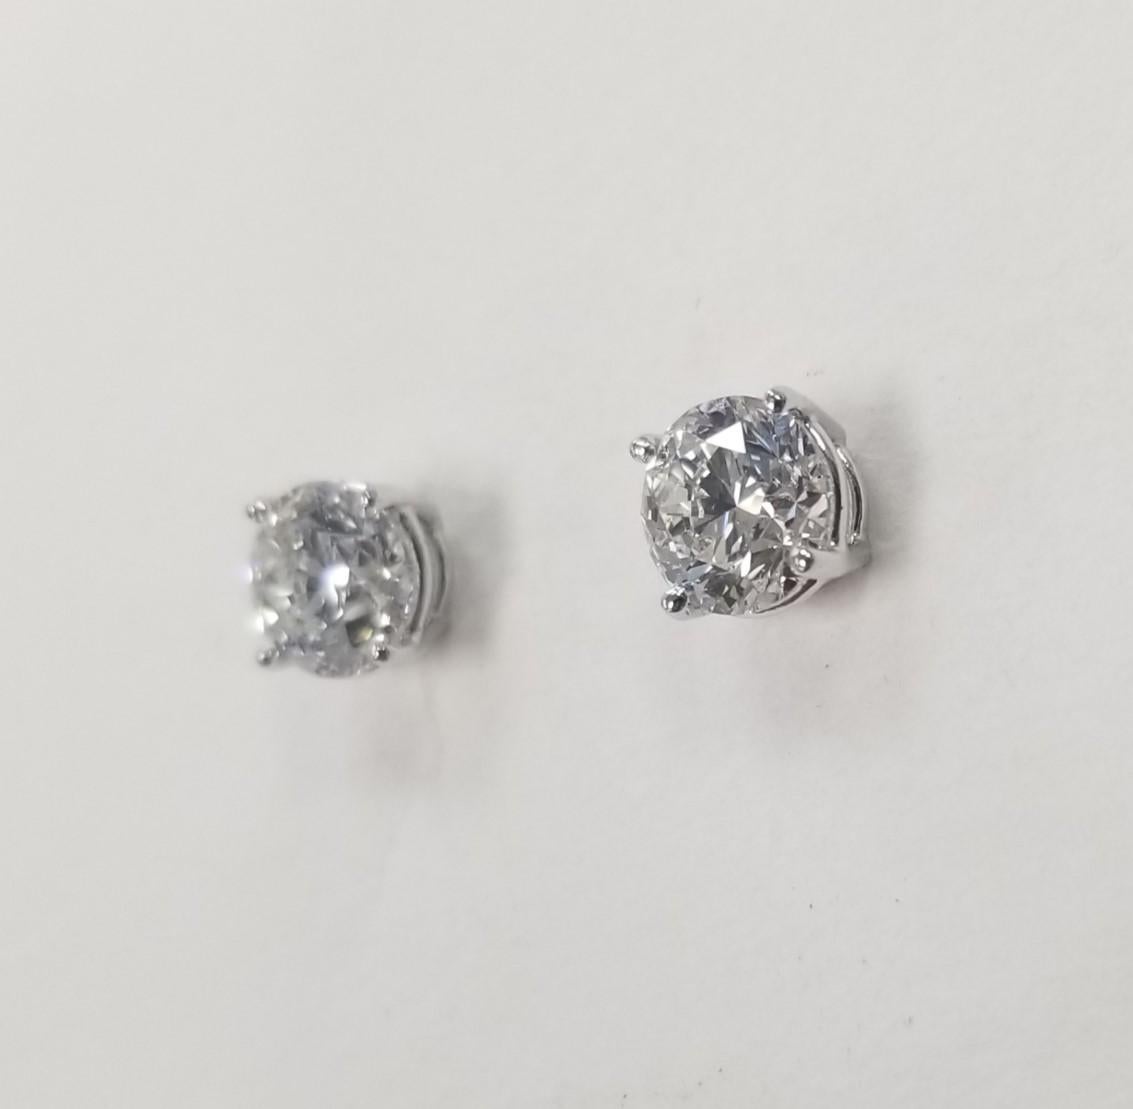 Diamond stud earrings, containing 2 GIA Certified brilliant cut diamonds; color 